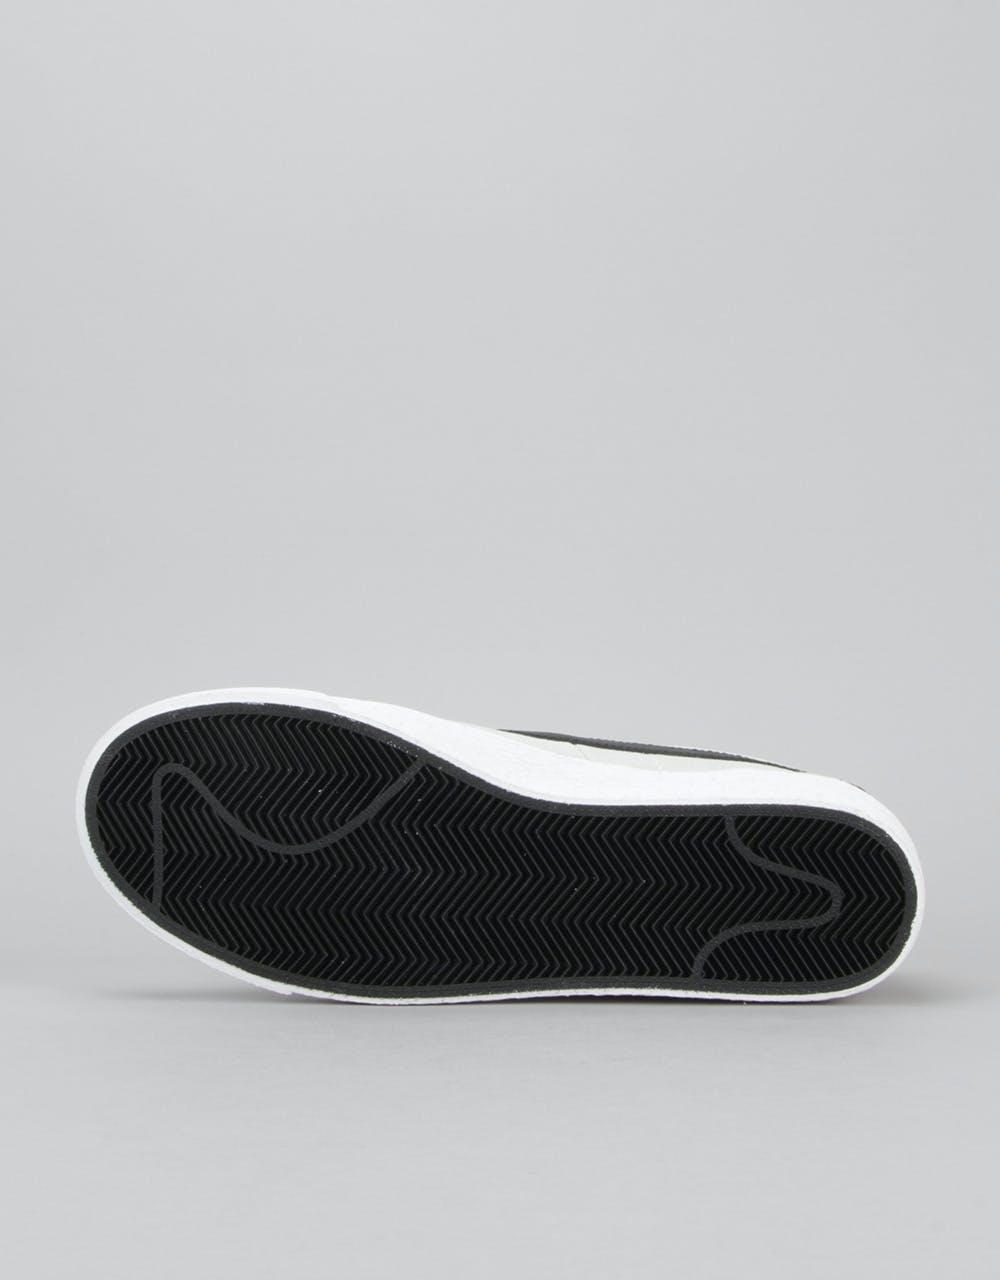 Nike SB Bruin Premium SE Skate Shoes - Barely Green/Black-White-Black